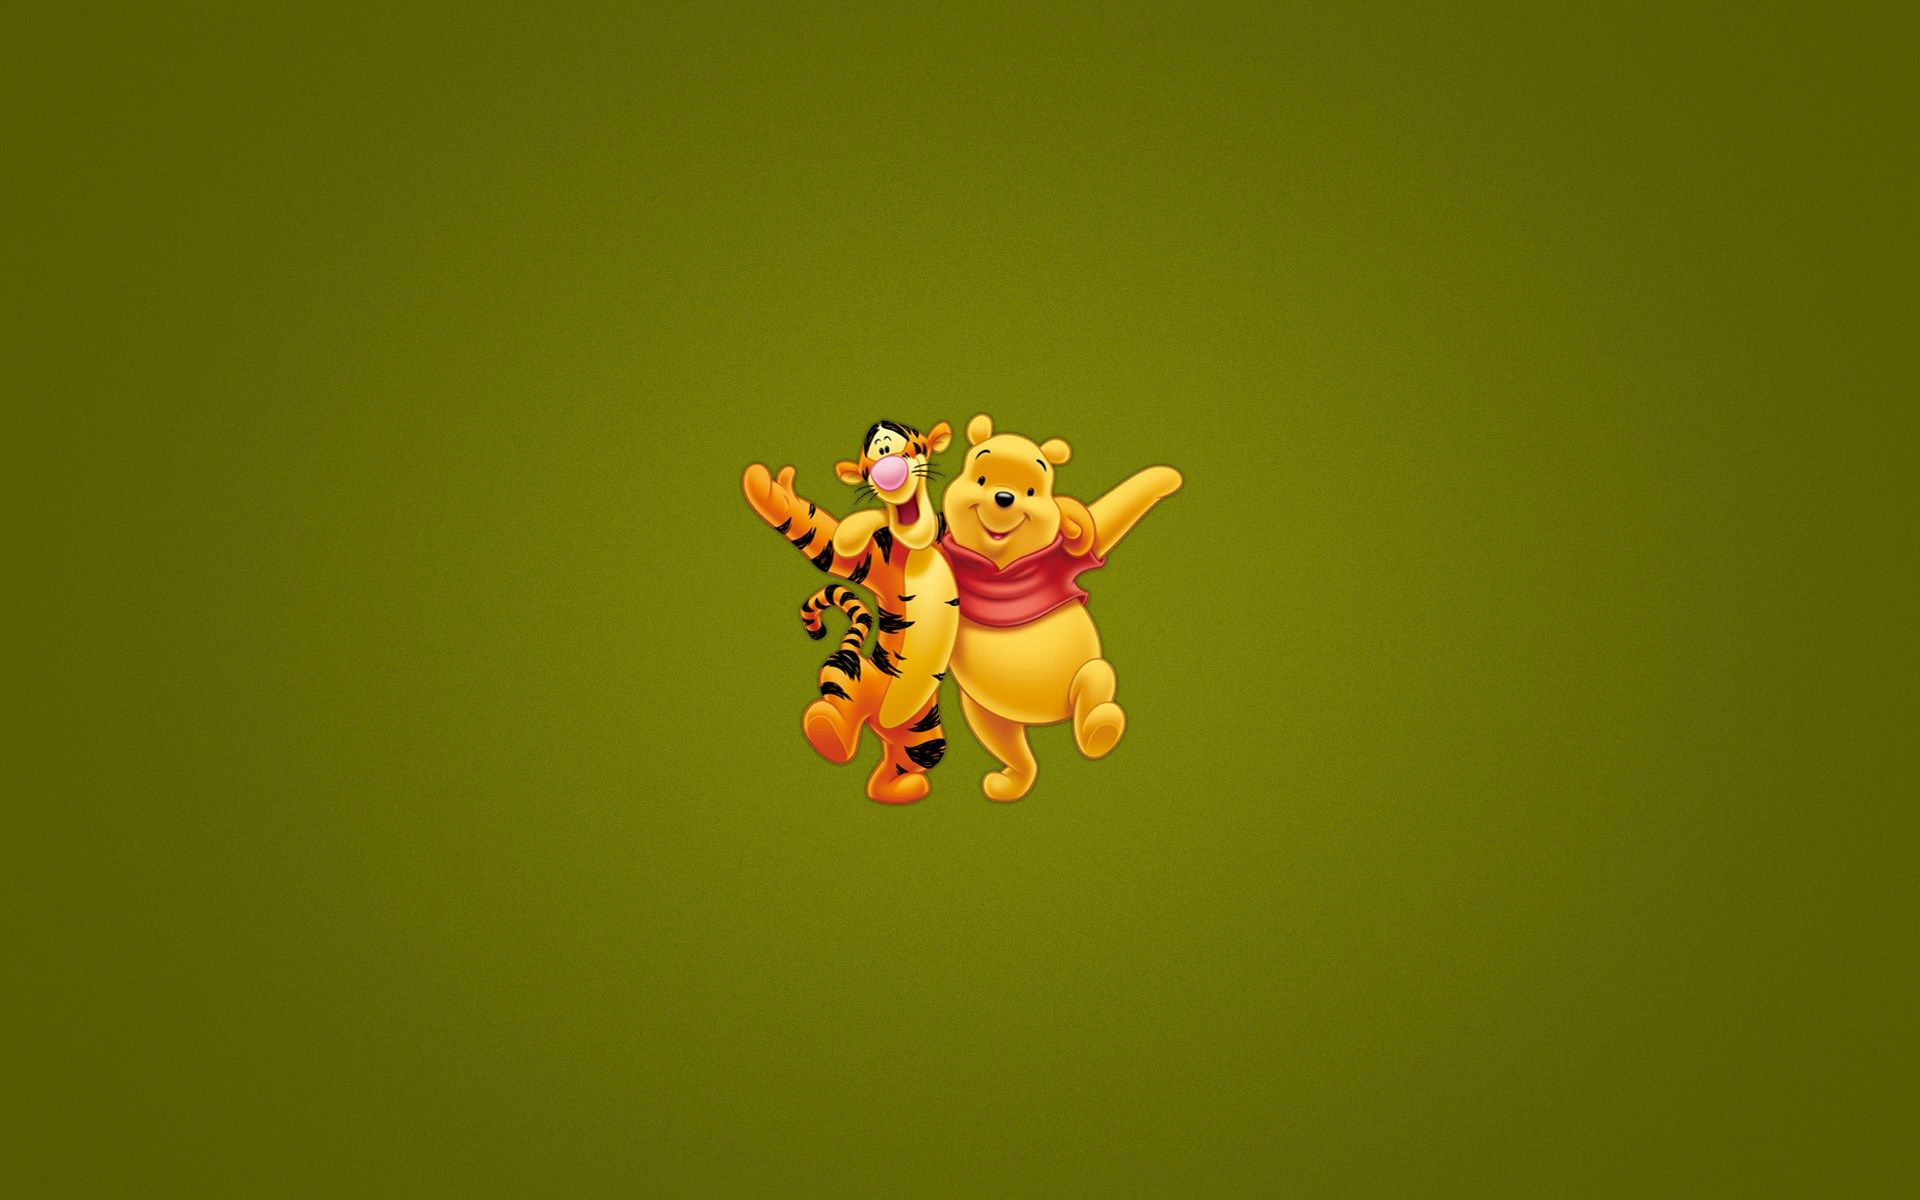 HD wallpaper, The, Tigger, Cartoon, Pooh, And, Winnie